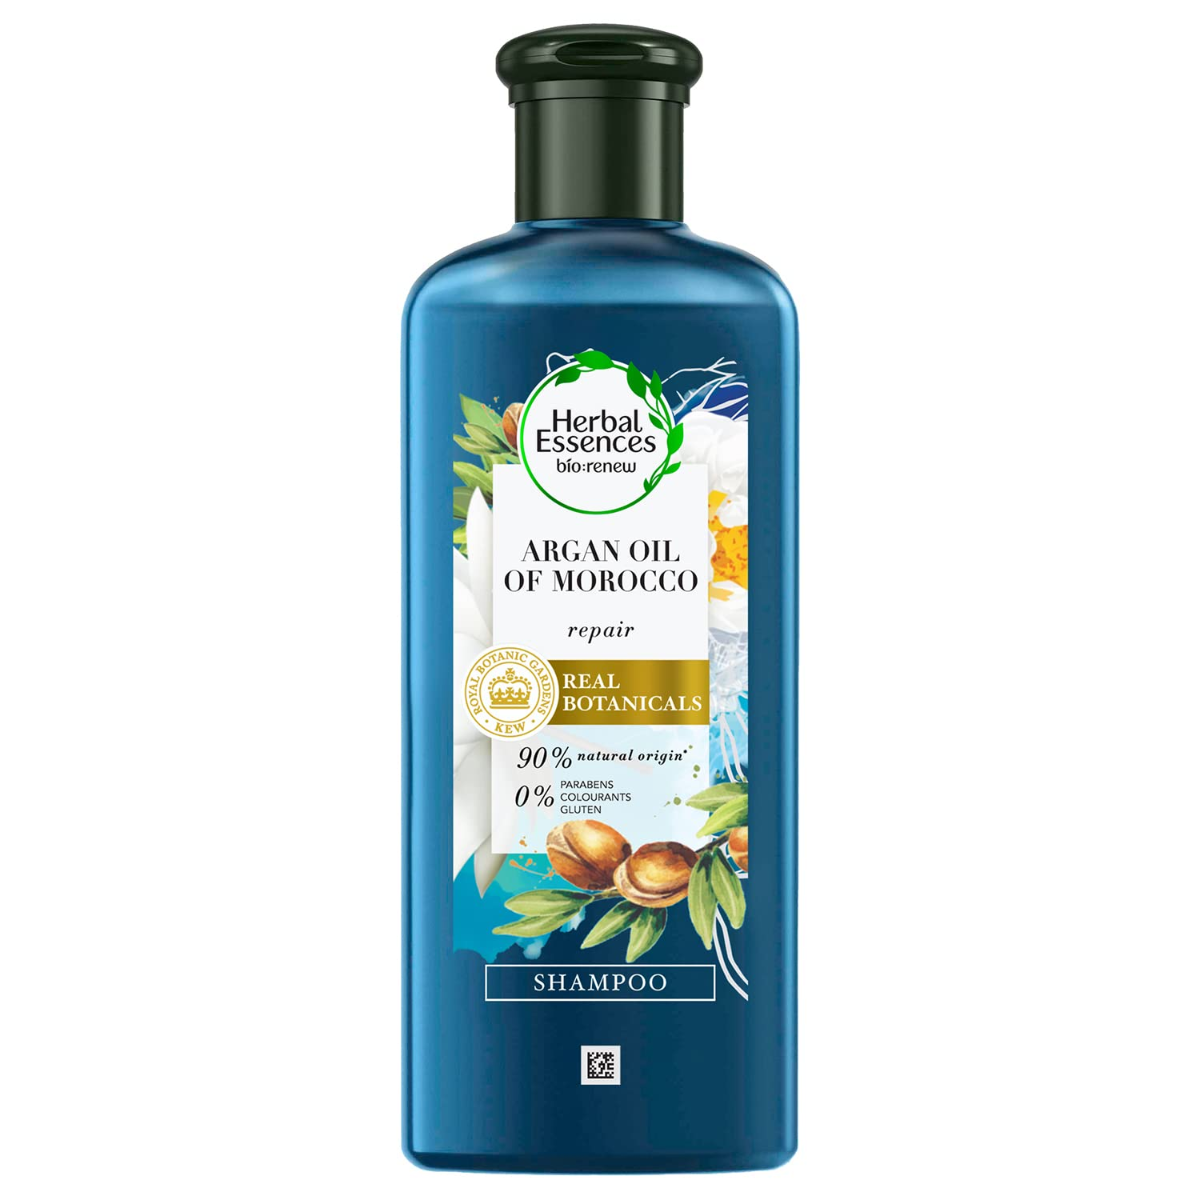 Herbal Essences Argan Oil of Morocco Shampoo, 240ml